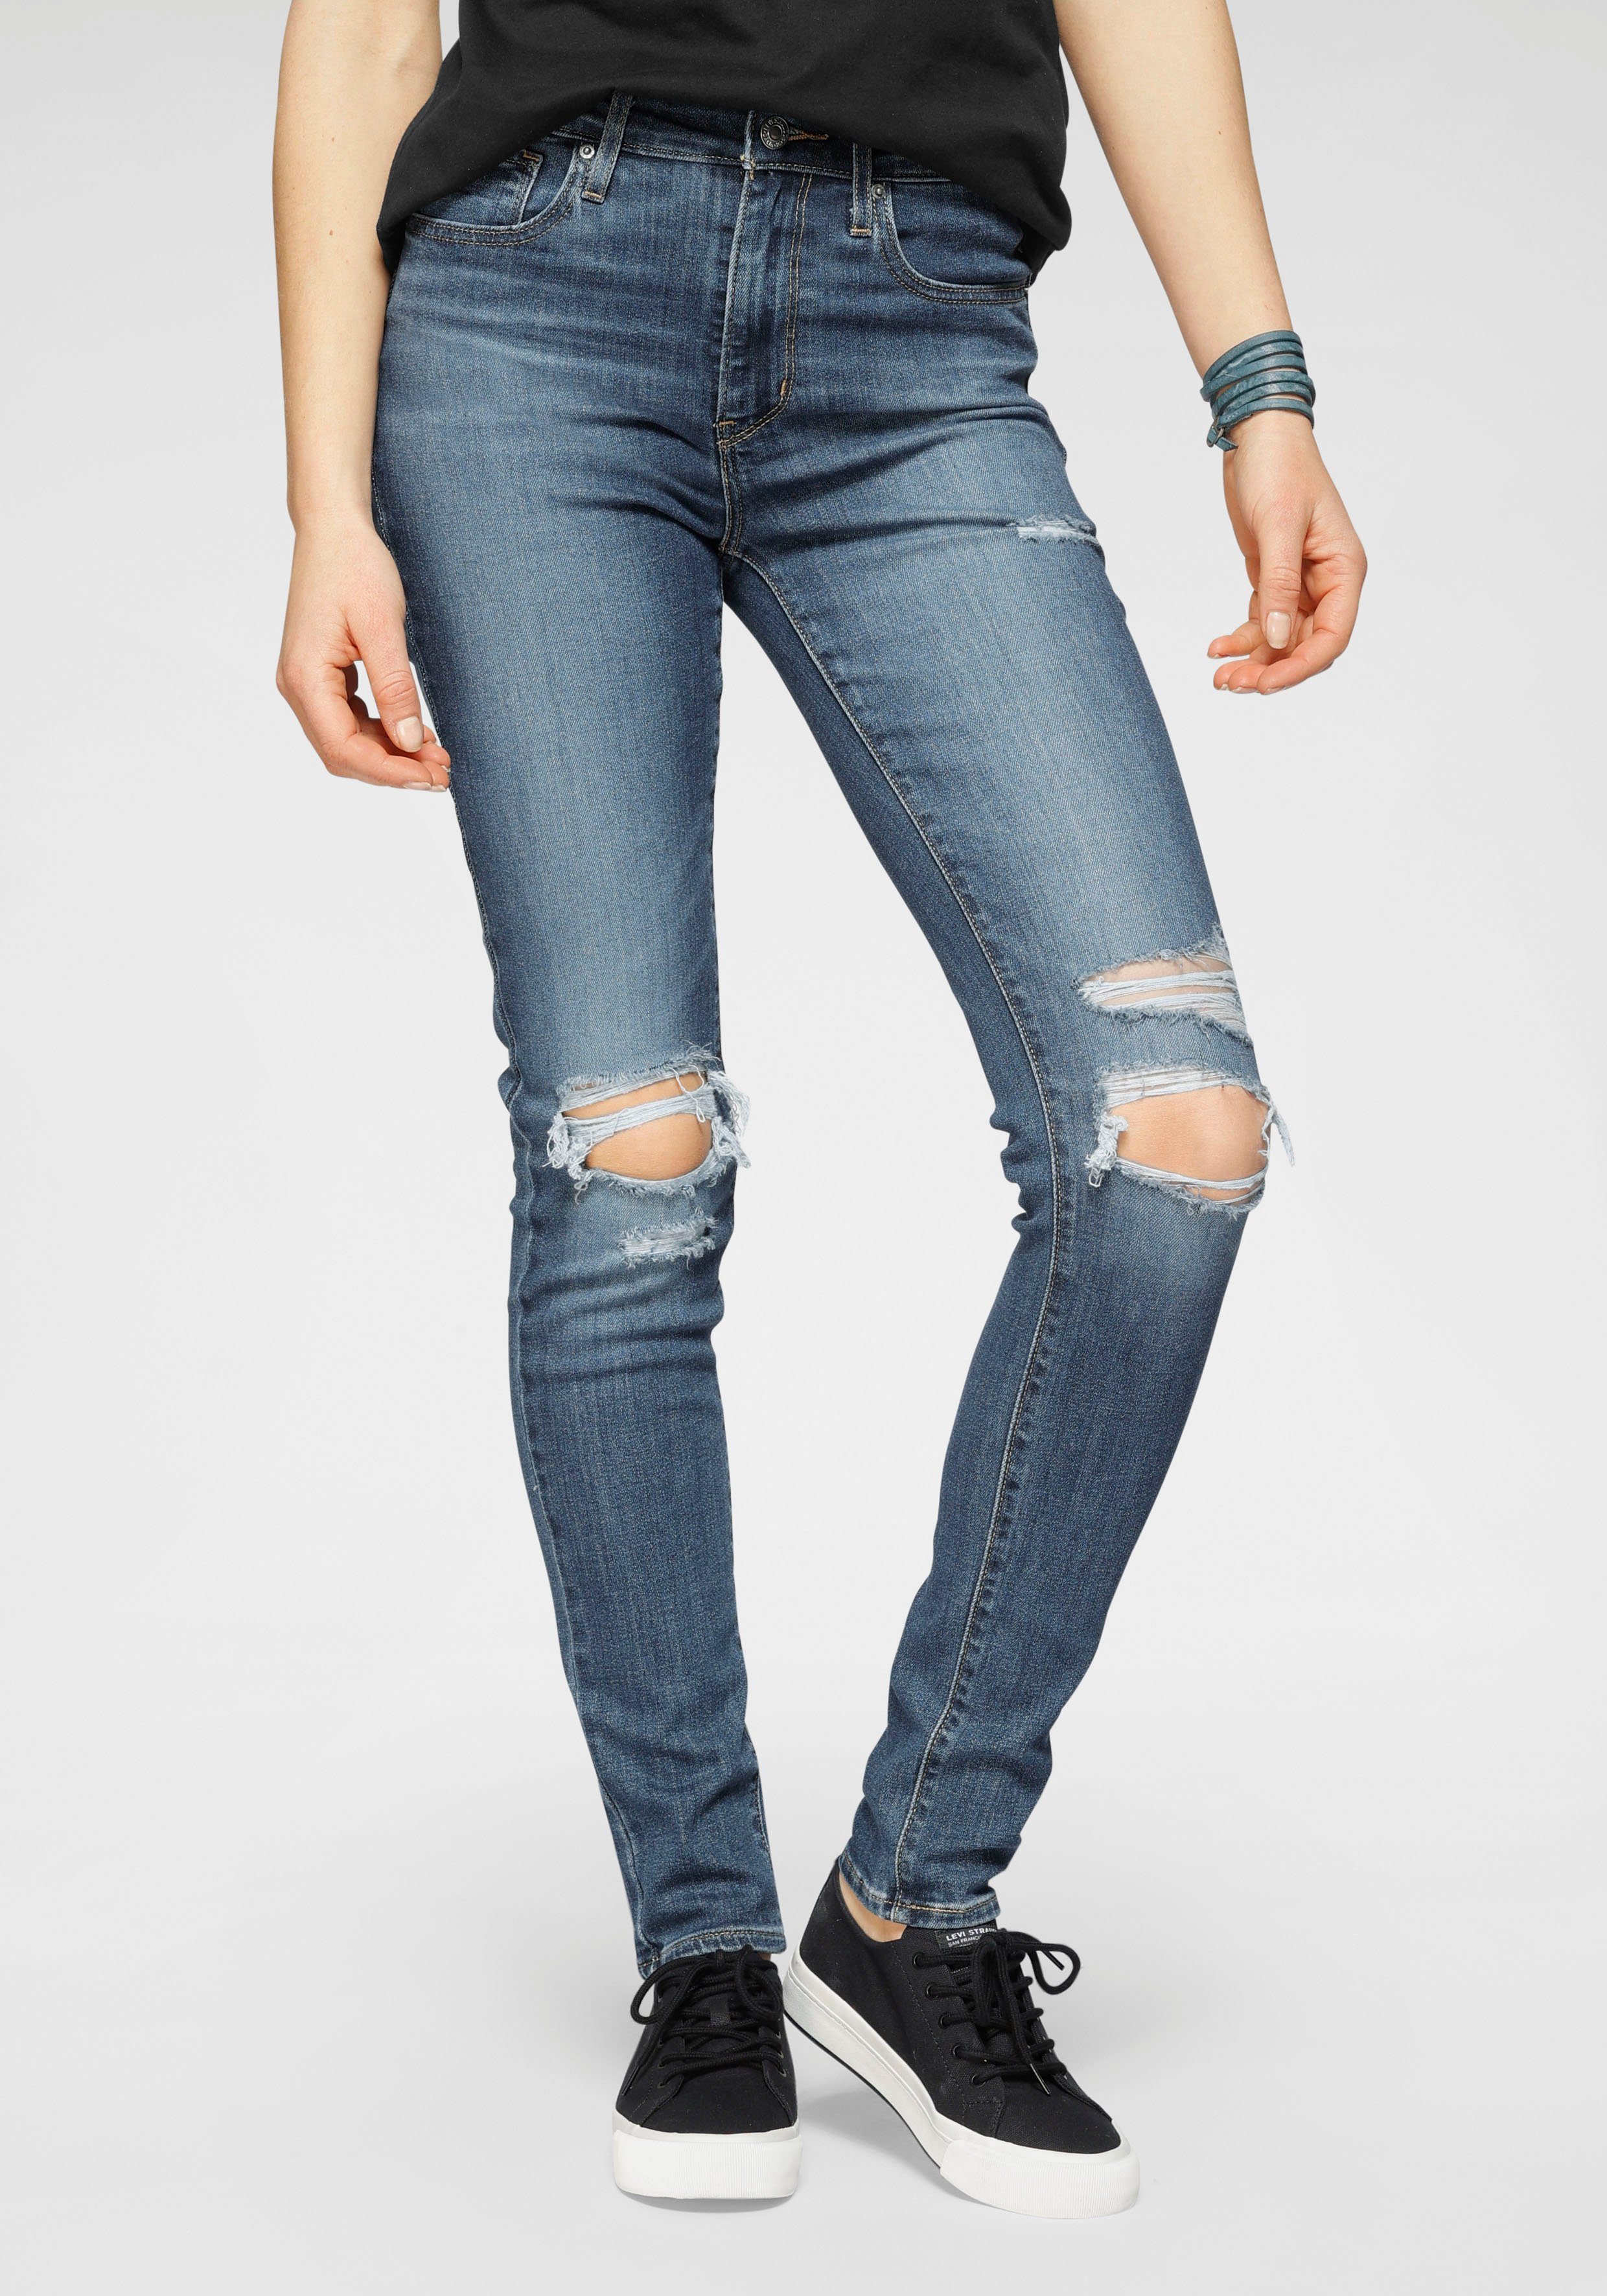 Hervat Numeriek Sandalen Ripped jeans kopen? Groot aanbod ripped jeans | OTTO